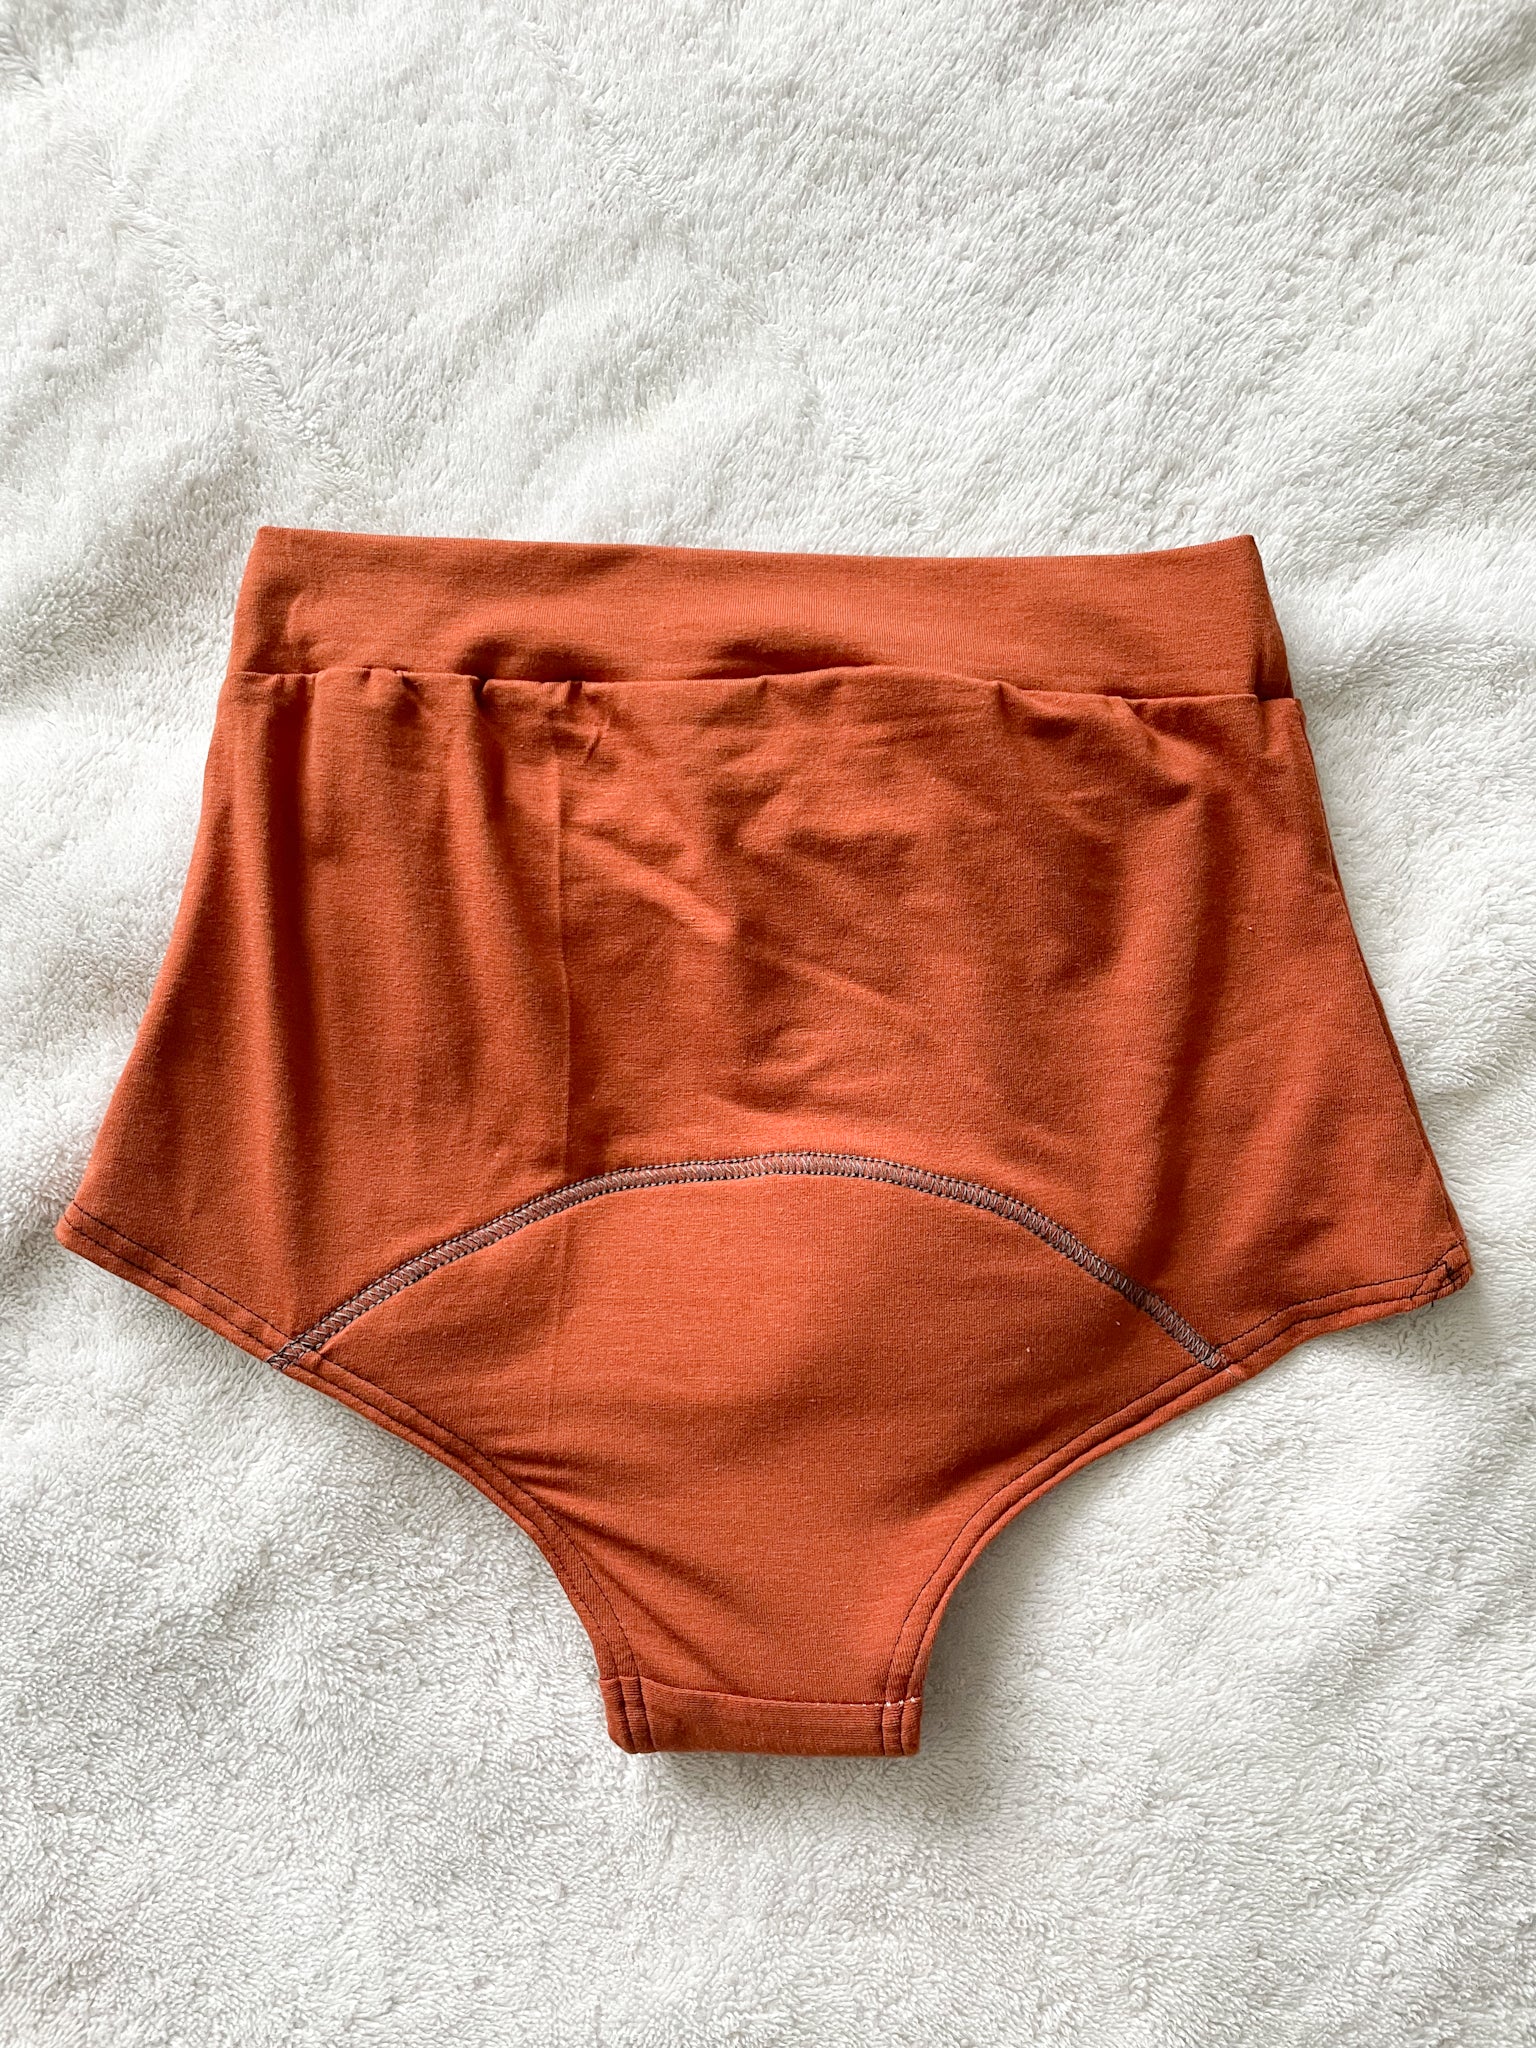 Bamboo Fabric Pad Free Menstrual/Period Panty, मेन्स्ट्रूअल पैड, मासिक धर्म  का पैड - Living Brown Private Limited, Mumbai